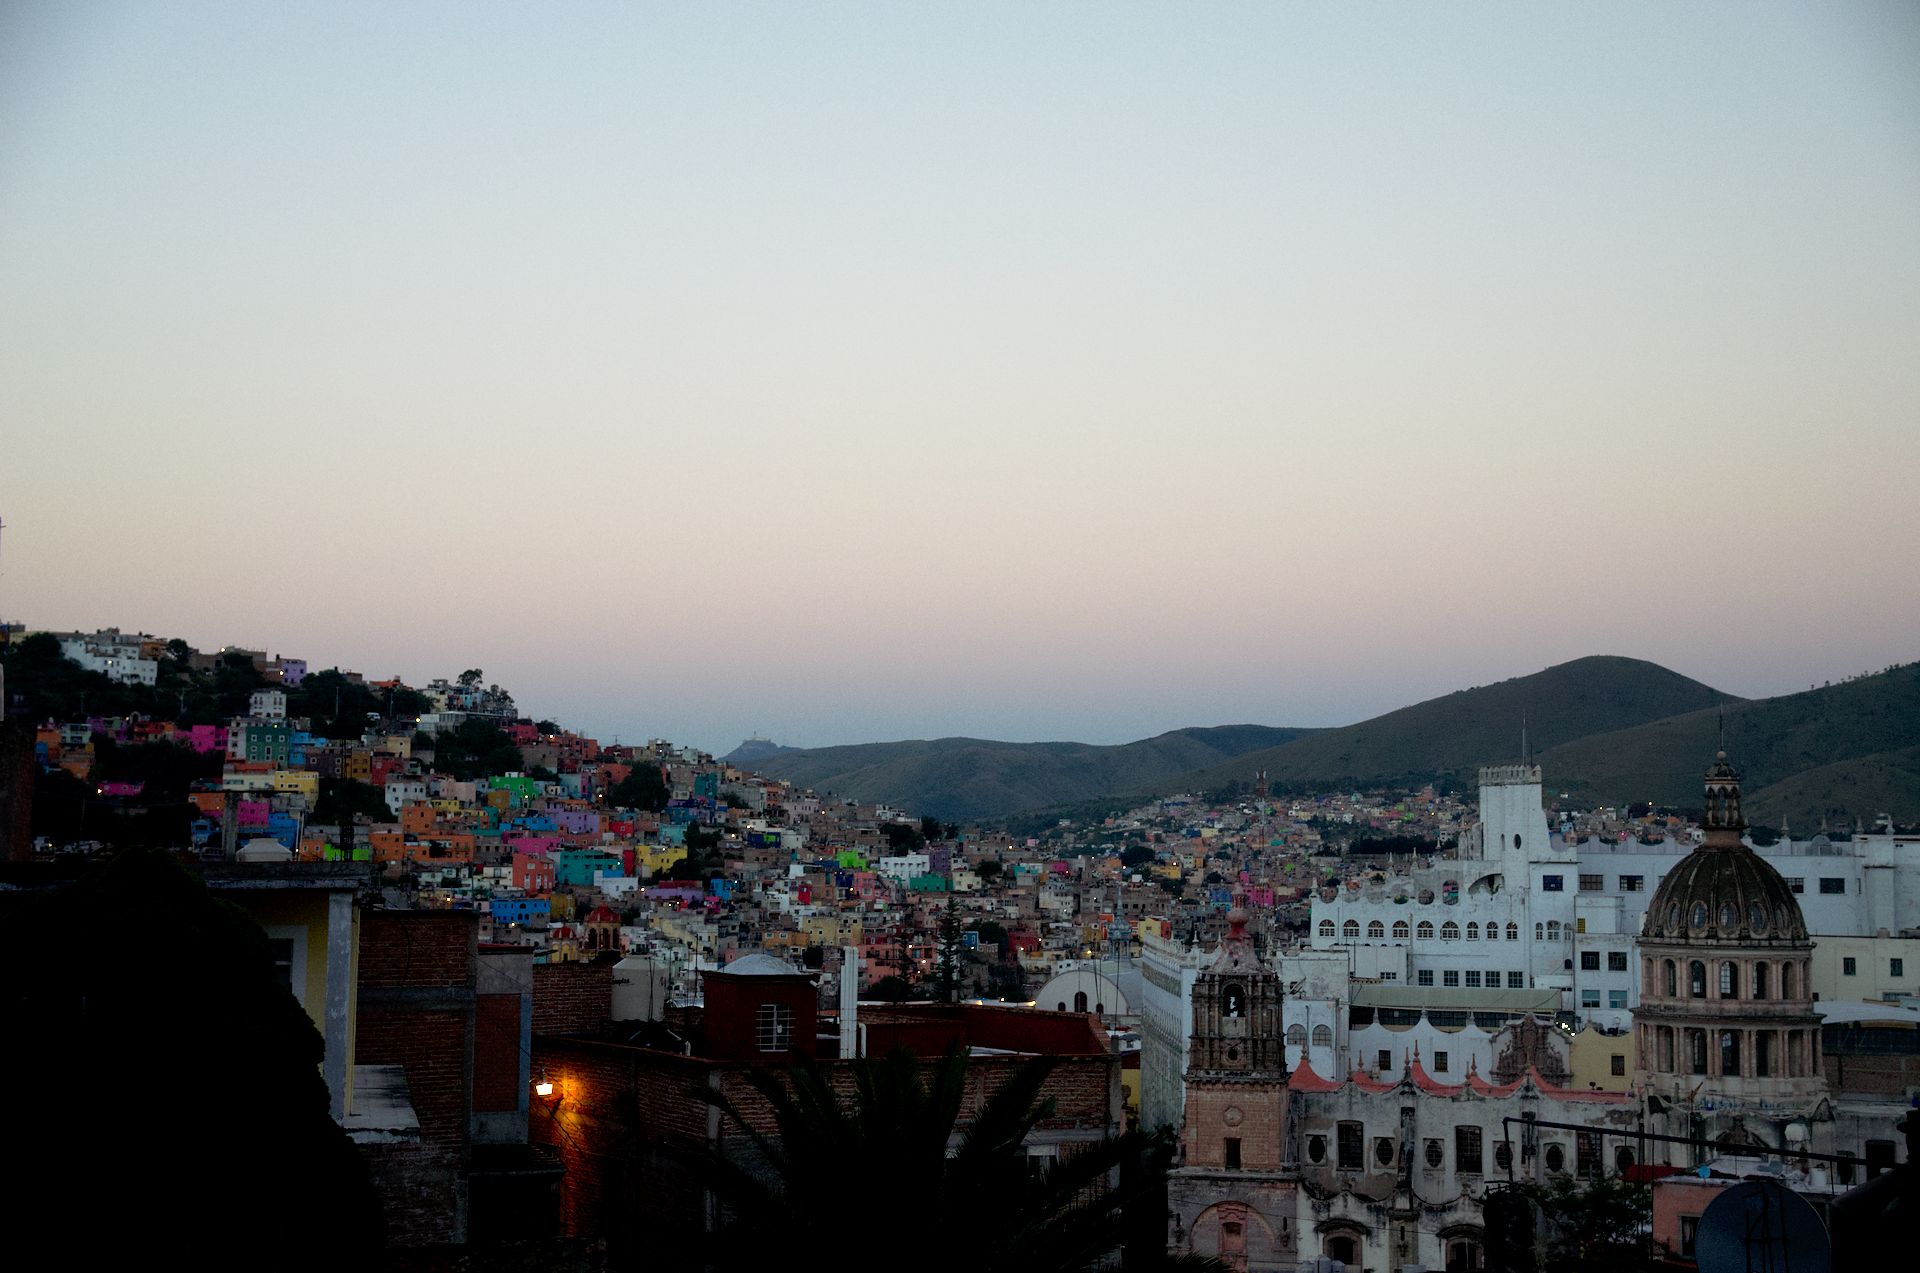 Wunderschöne Farbenpracht in Guanajuato